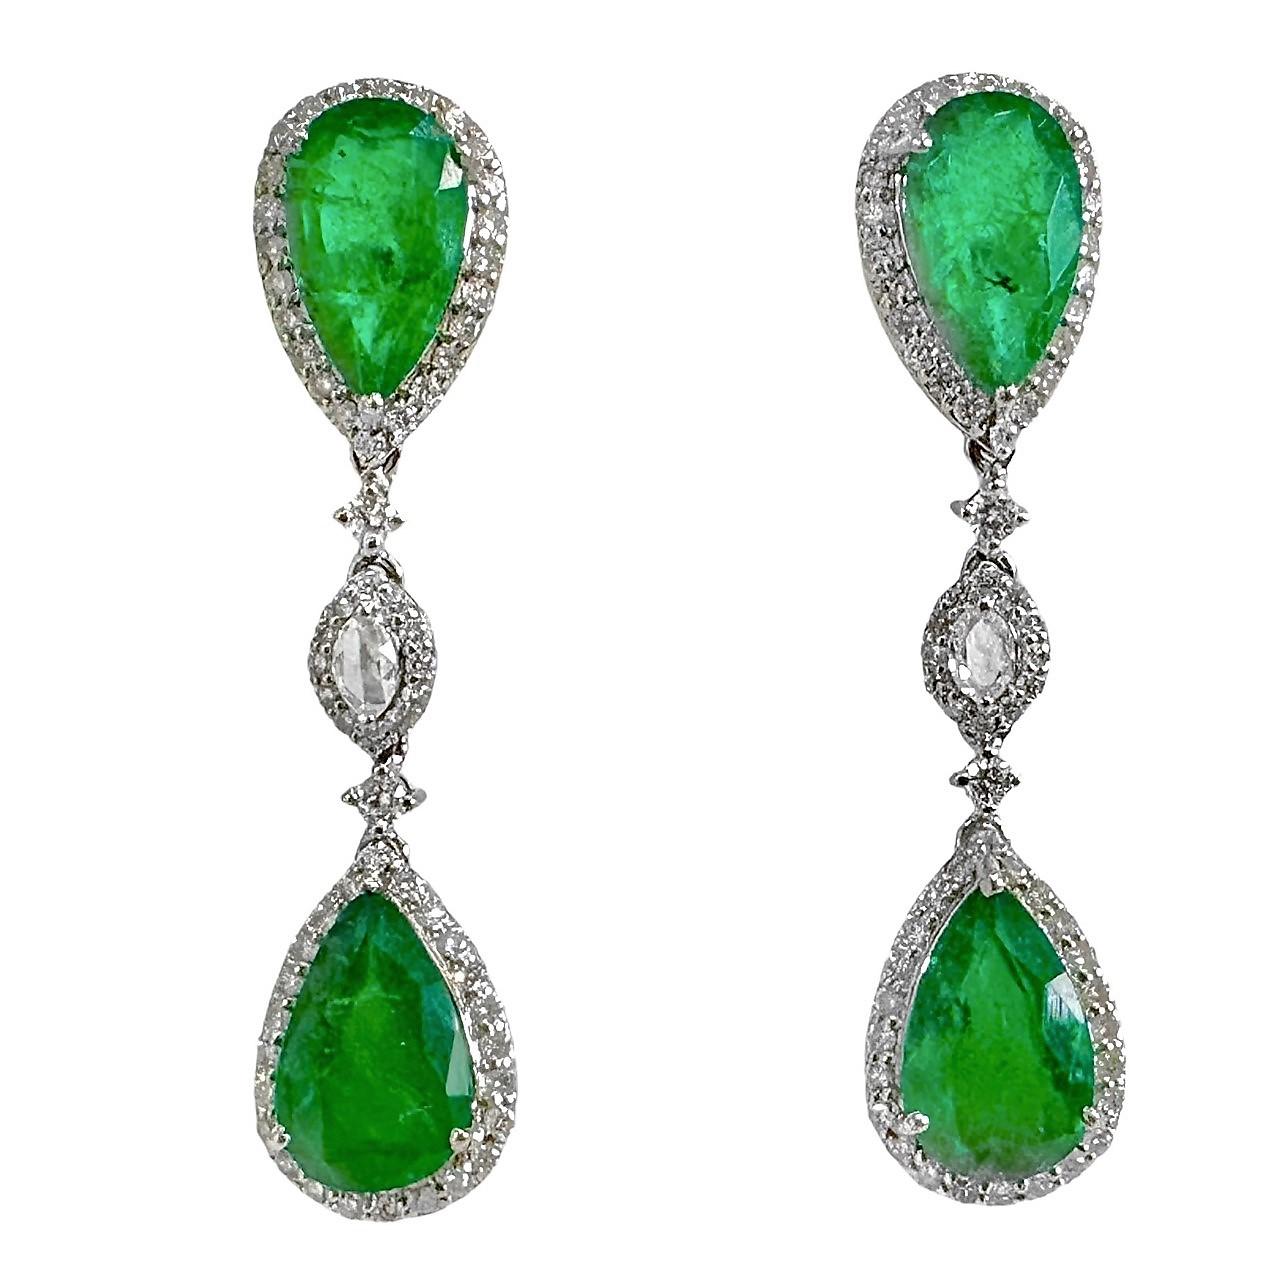 Modern 18k White Gold Pear Shaped Emerald and Diamond Drop Earrings